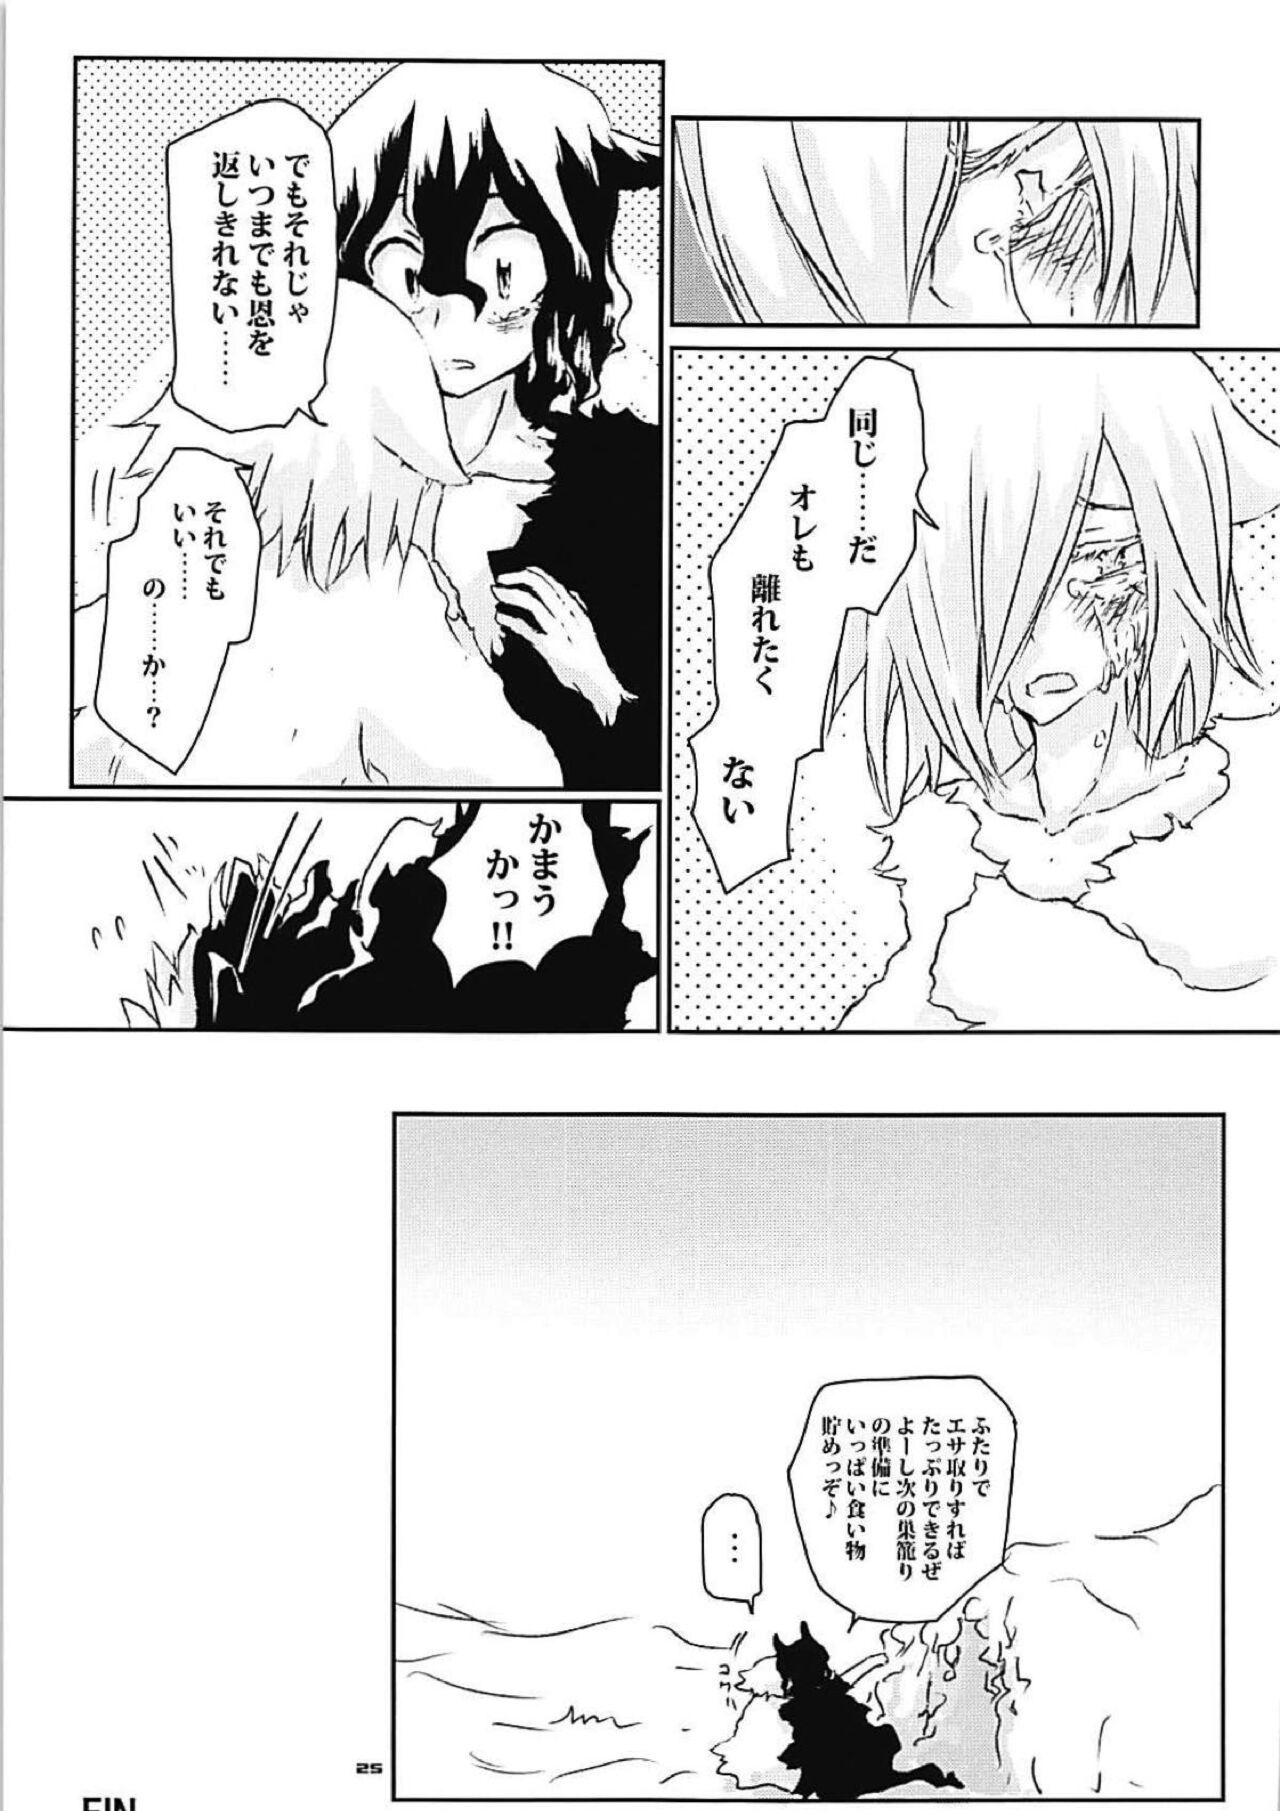 Foreplay Aru-nen no ama su no ri - Yowamushi pedal Family Roleplay - Page 23